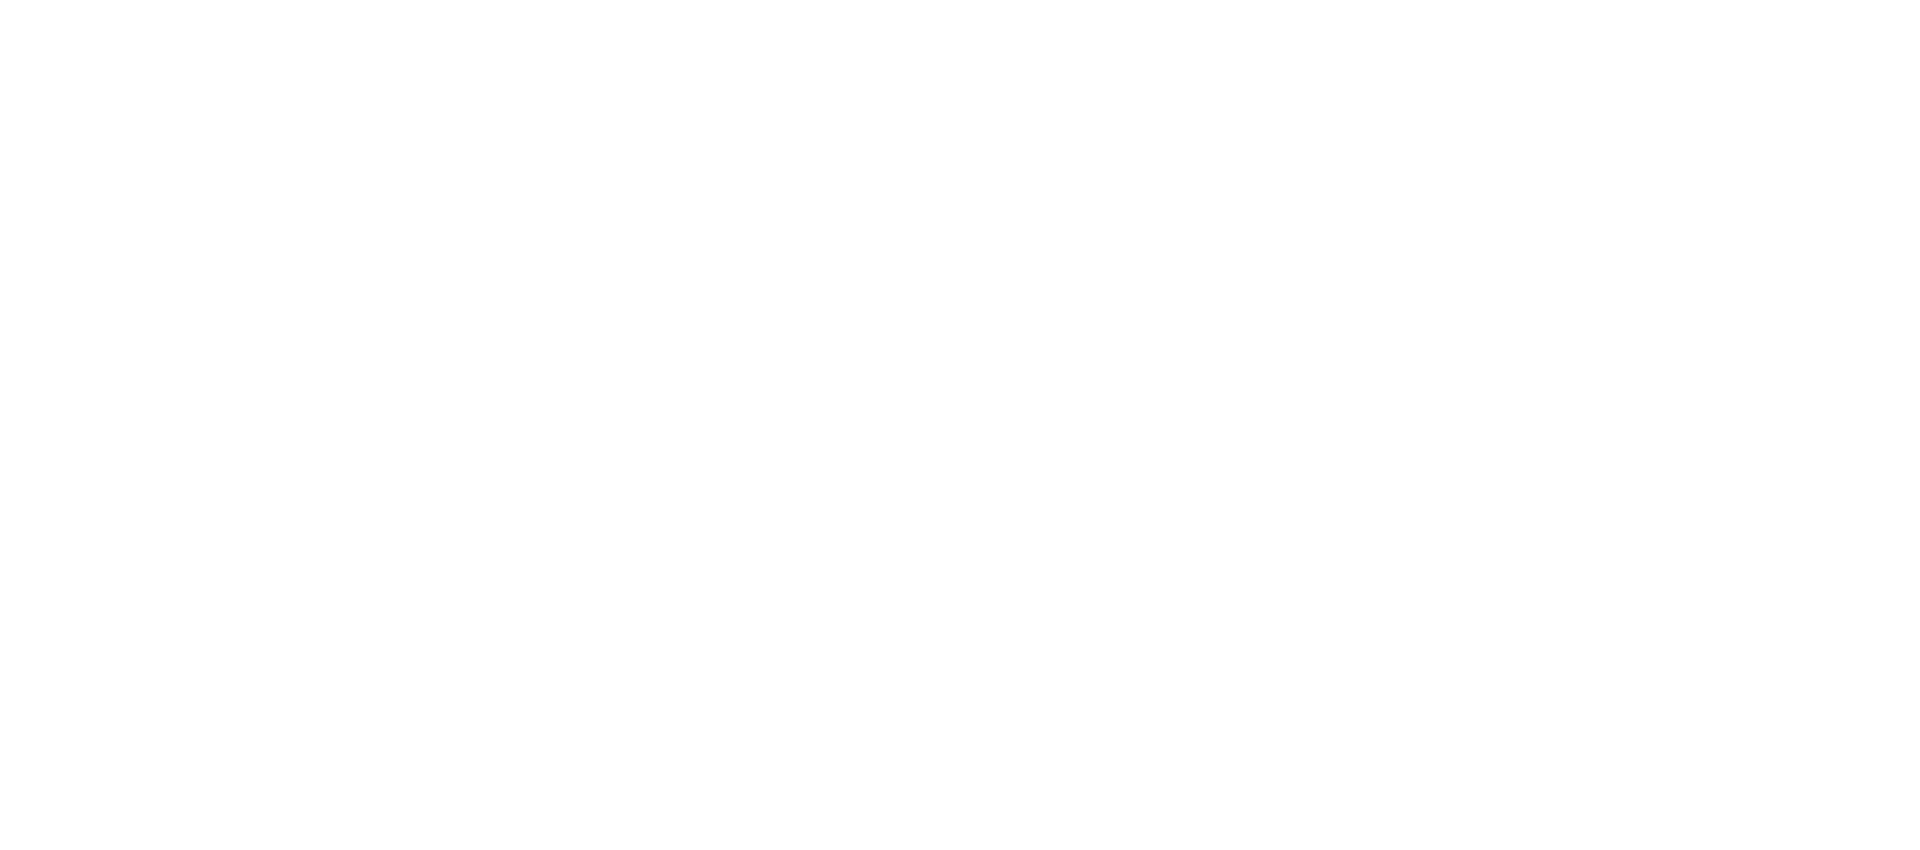 We seek opportunities to create lasting change.